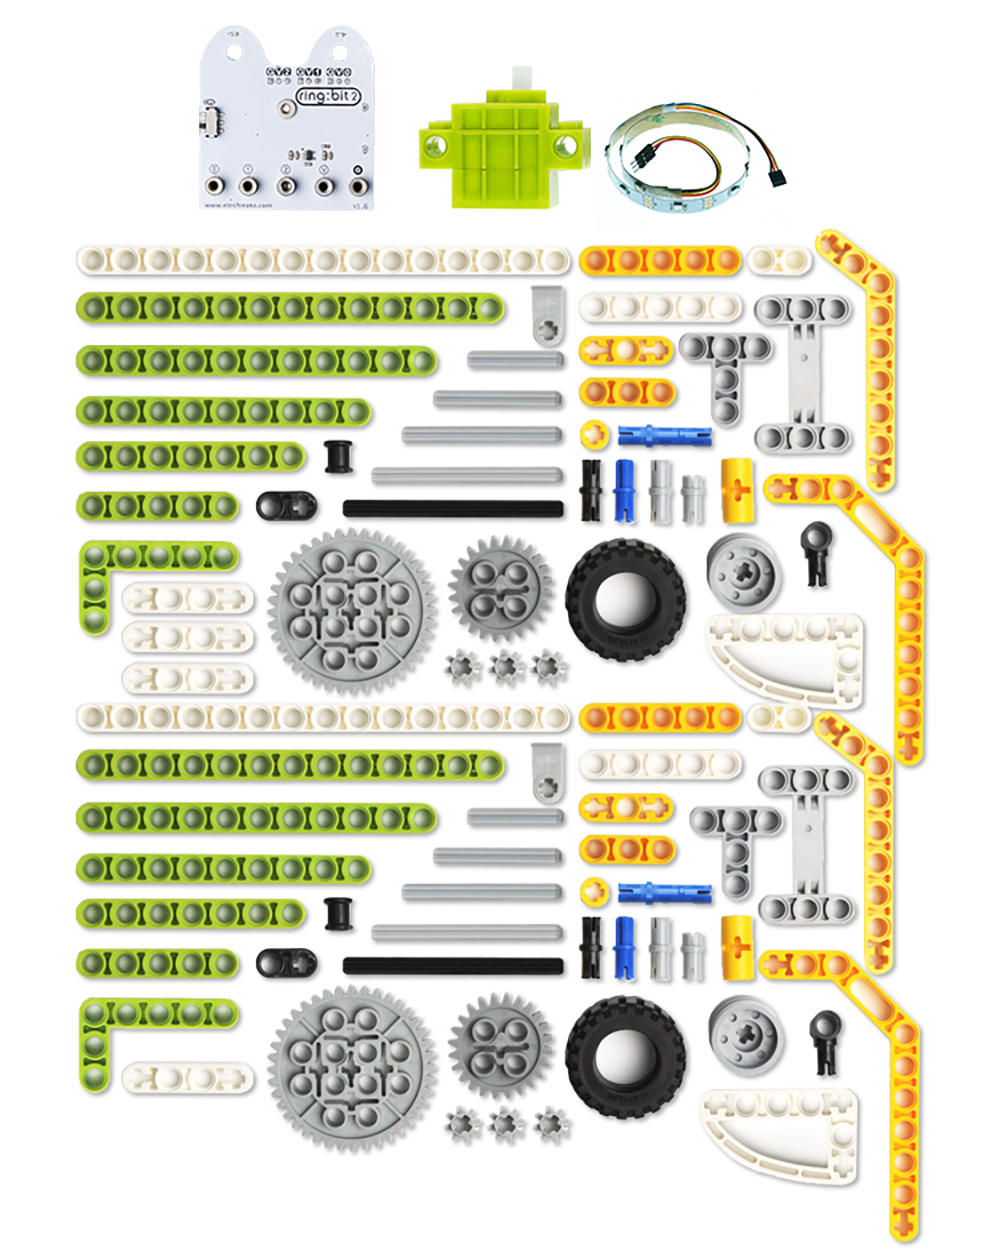 ElecFreaks-Microbit-Children-Programming-Electronic-Building-Blocks-6-in-1-Kit-RC-Smart-Robot-1784626-11